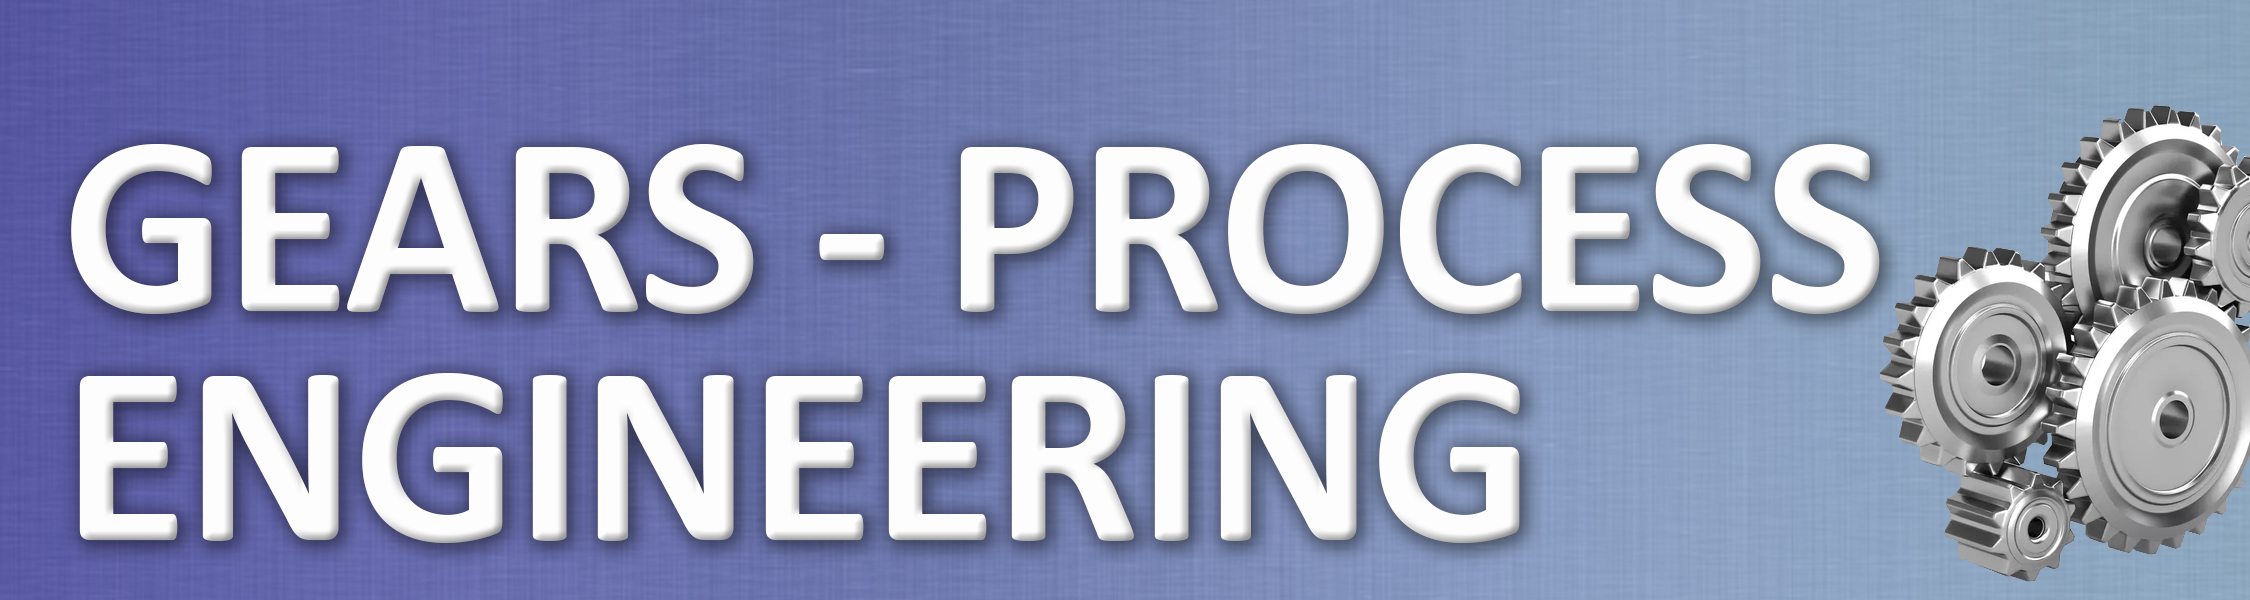 Gears - Process Engr header